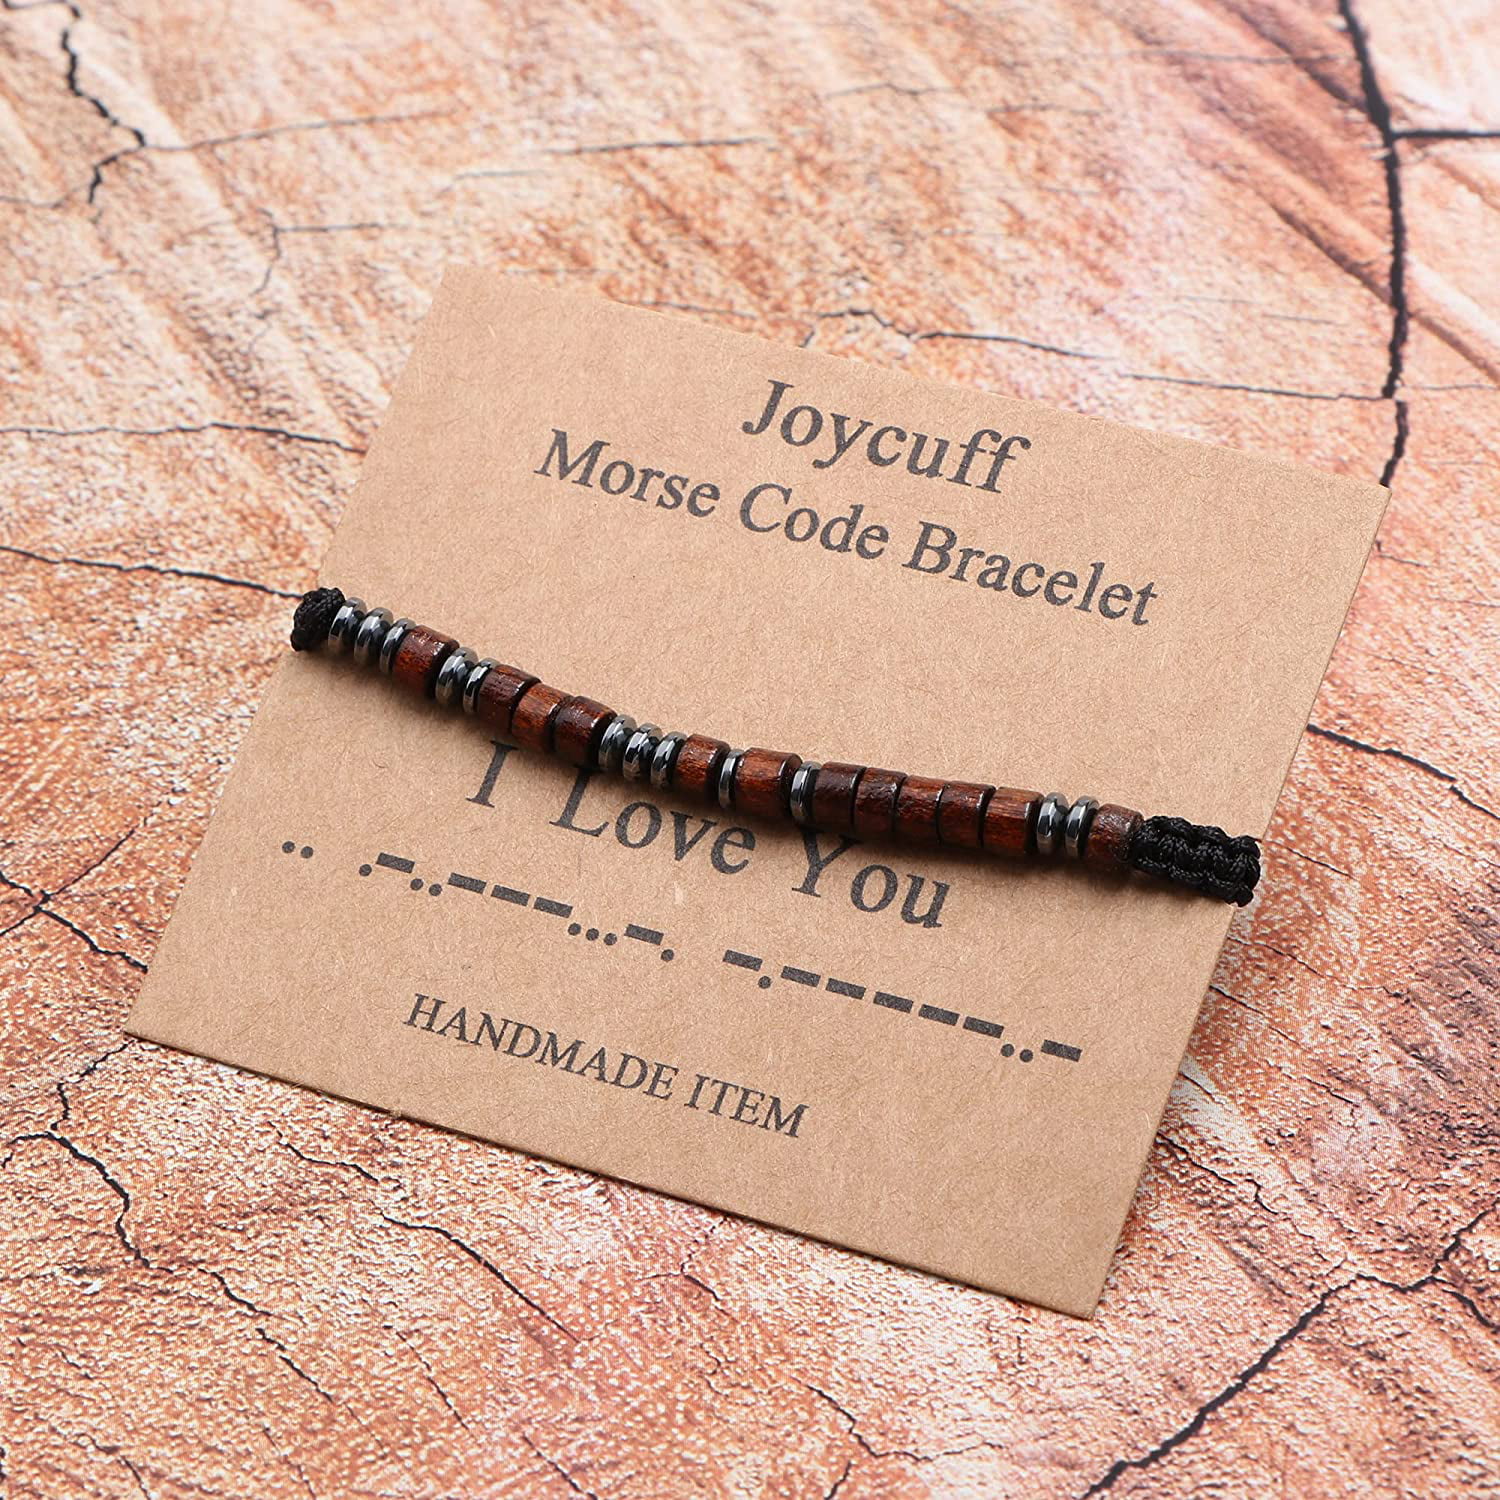 JoycuFF Morse Code Bracelets for Women Gifts for Her Women Teen Girls Mom Daughter Sister Best Friend Inspirational Funny Jewelry Silk Beaded Wrap Bracelet Adjustable